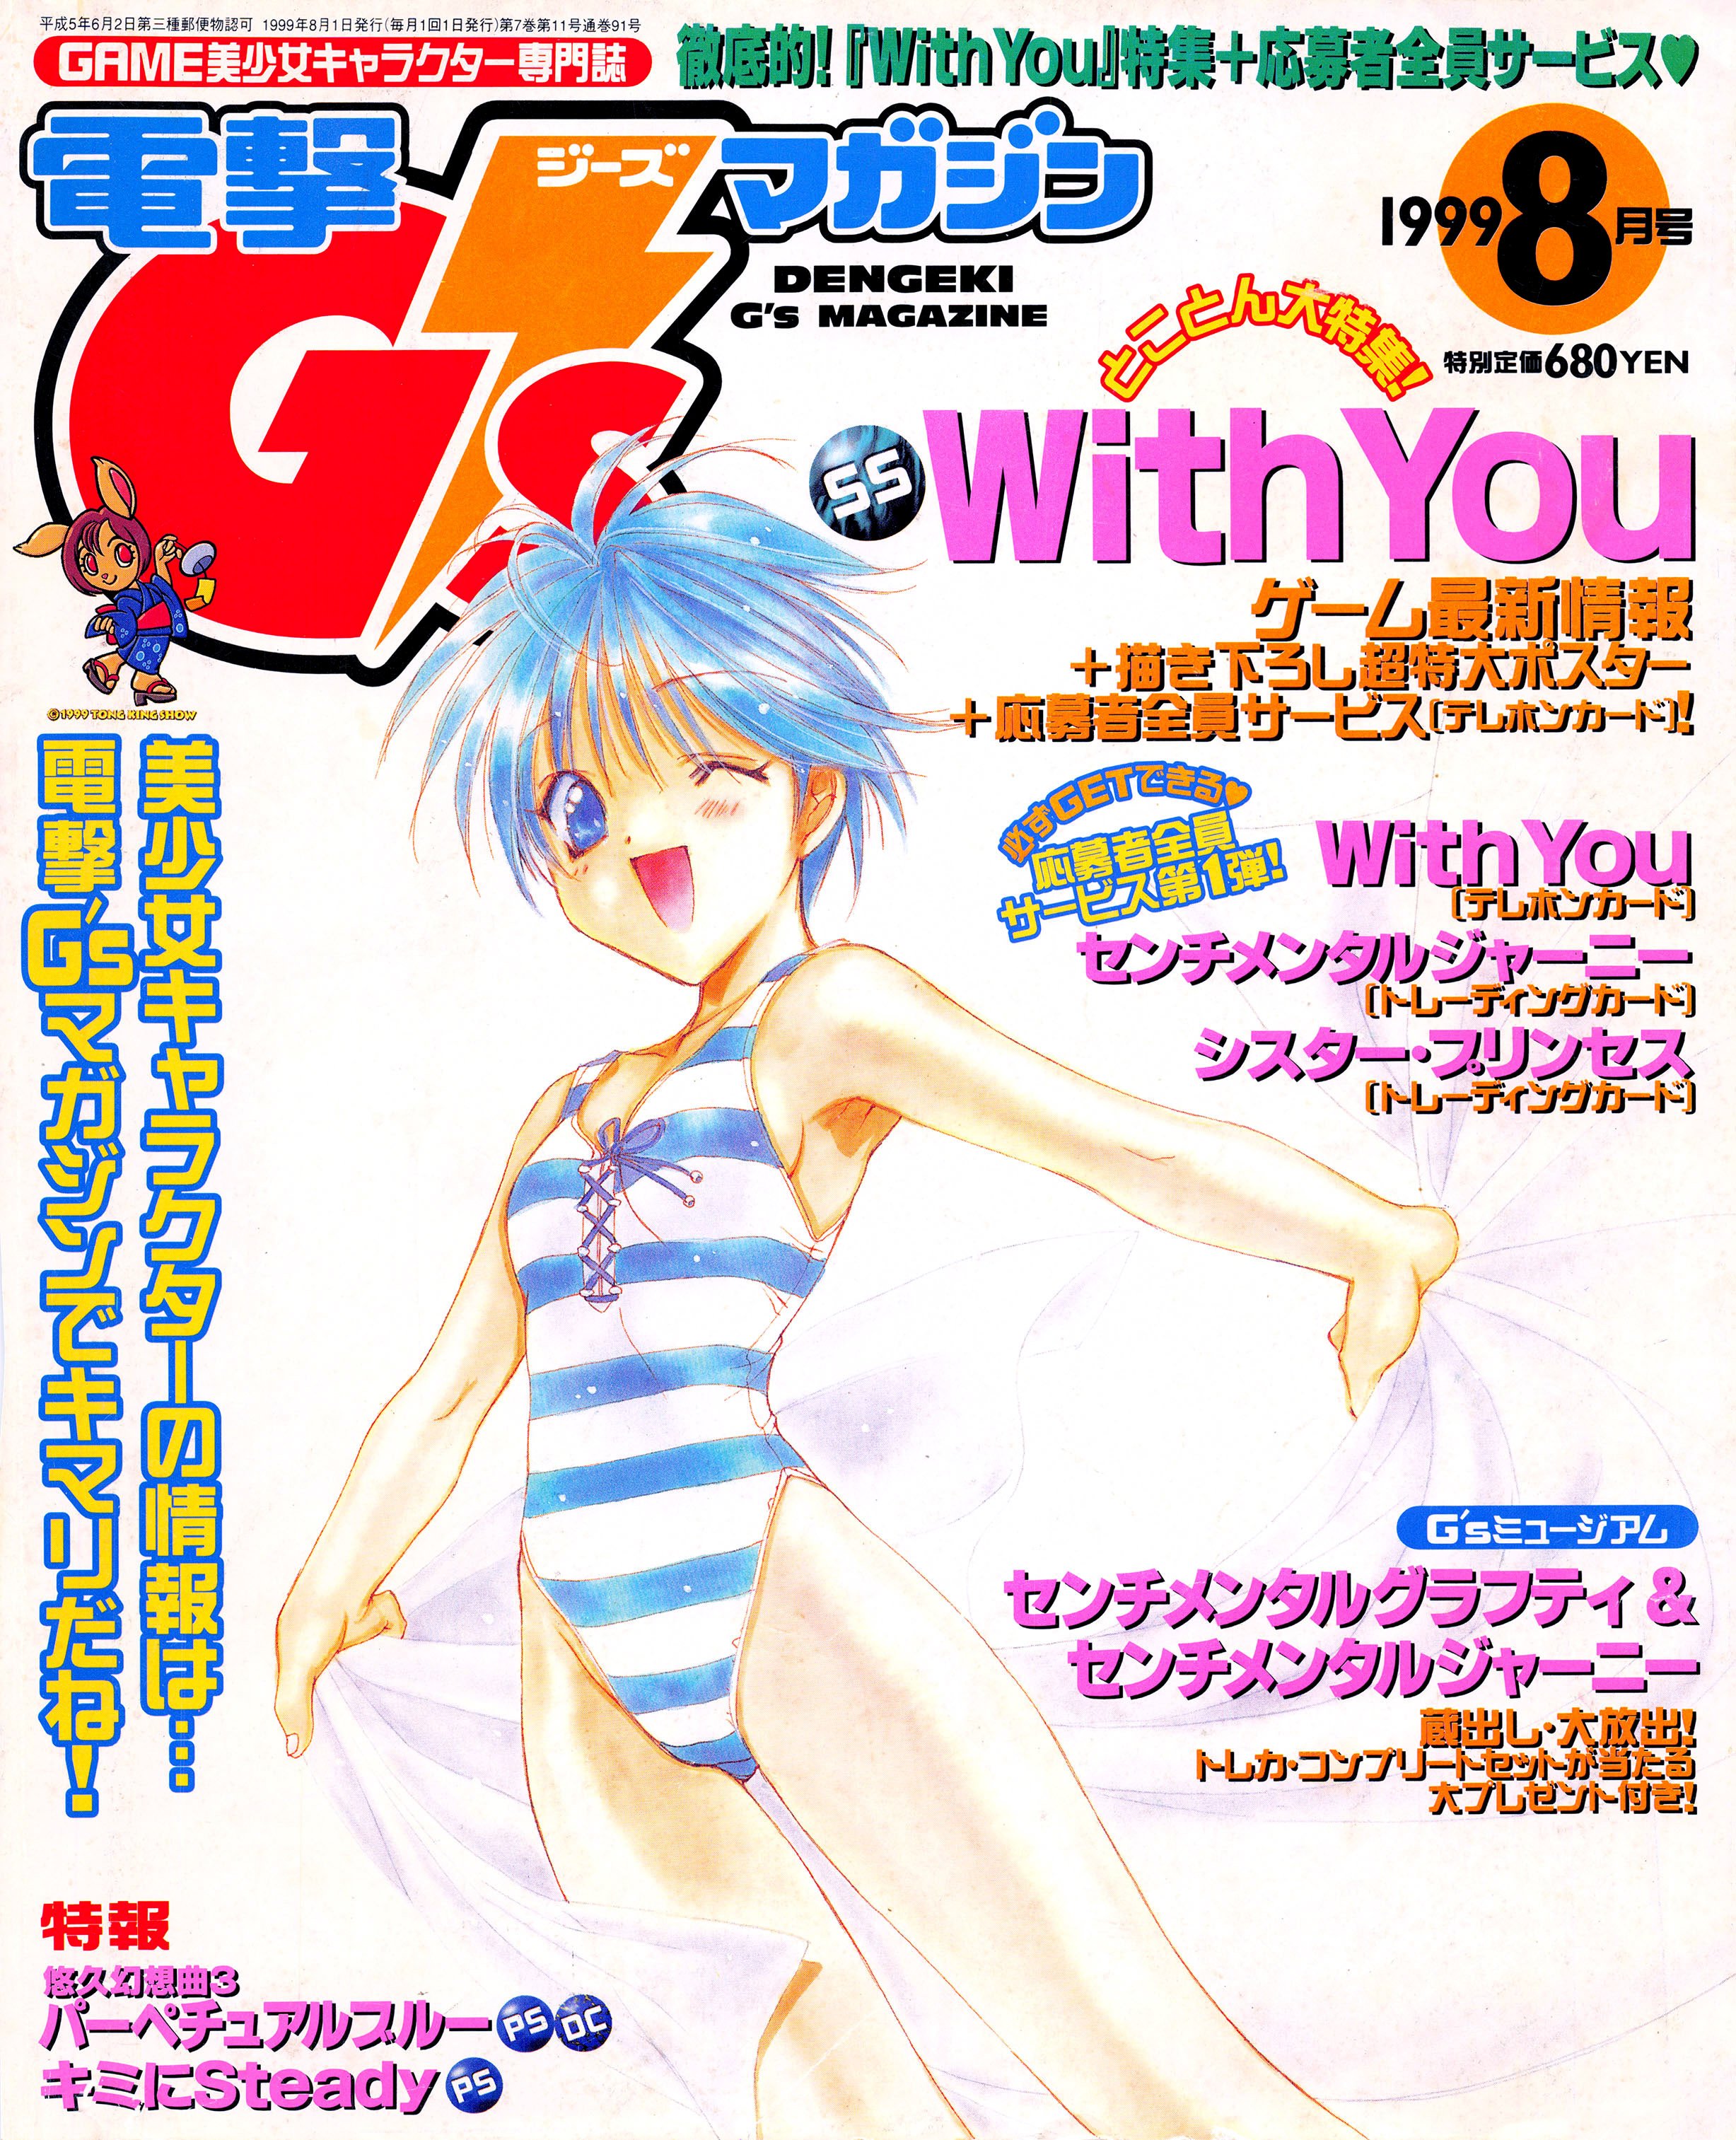 Dengeki G's Magazine Issue 025 (August 1999)